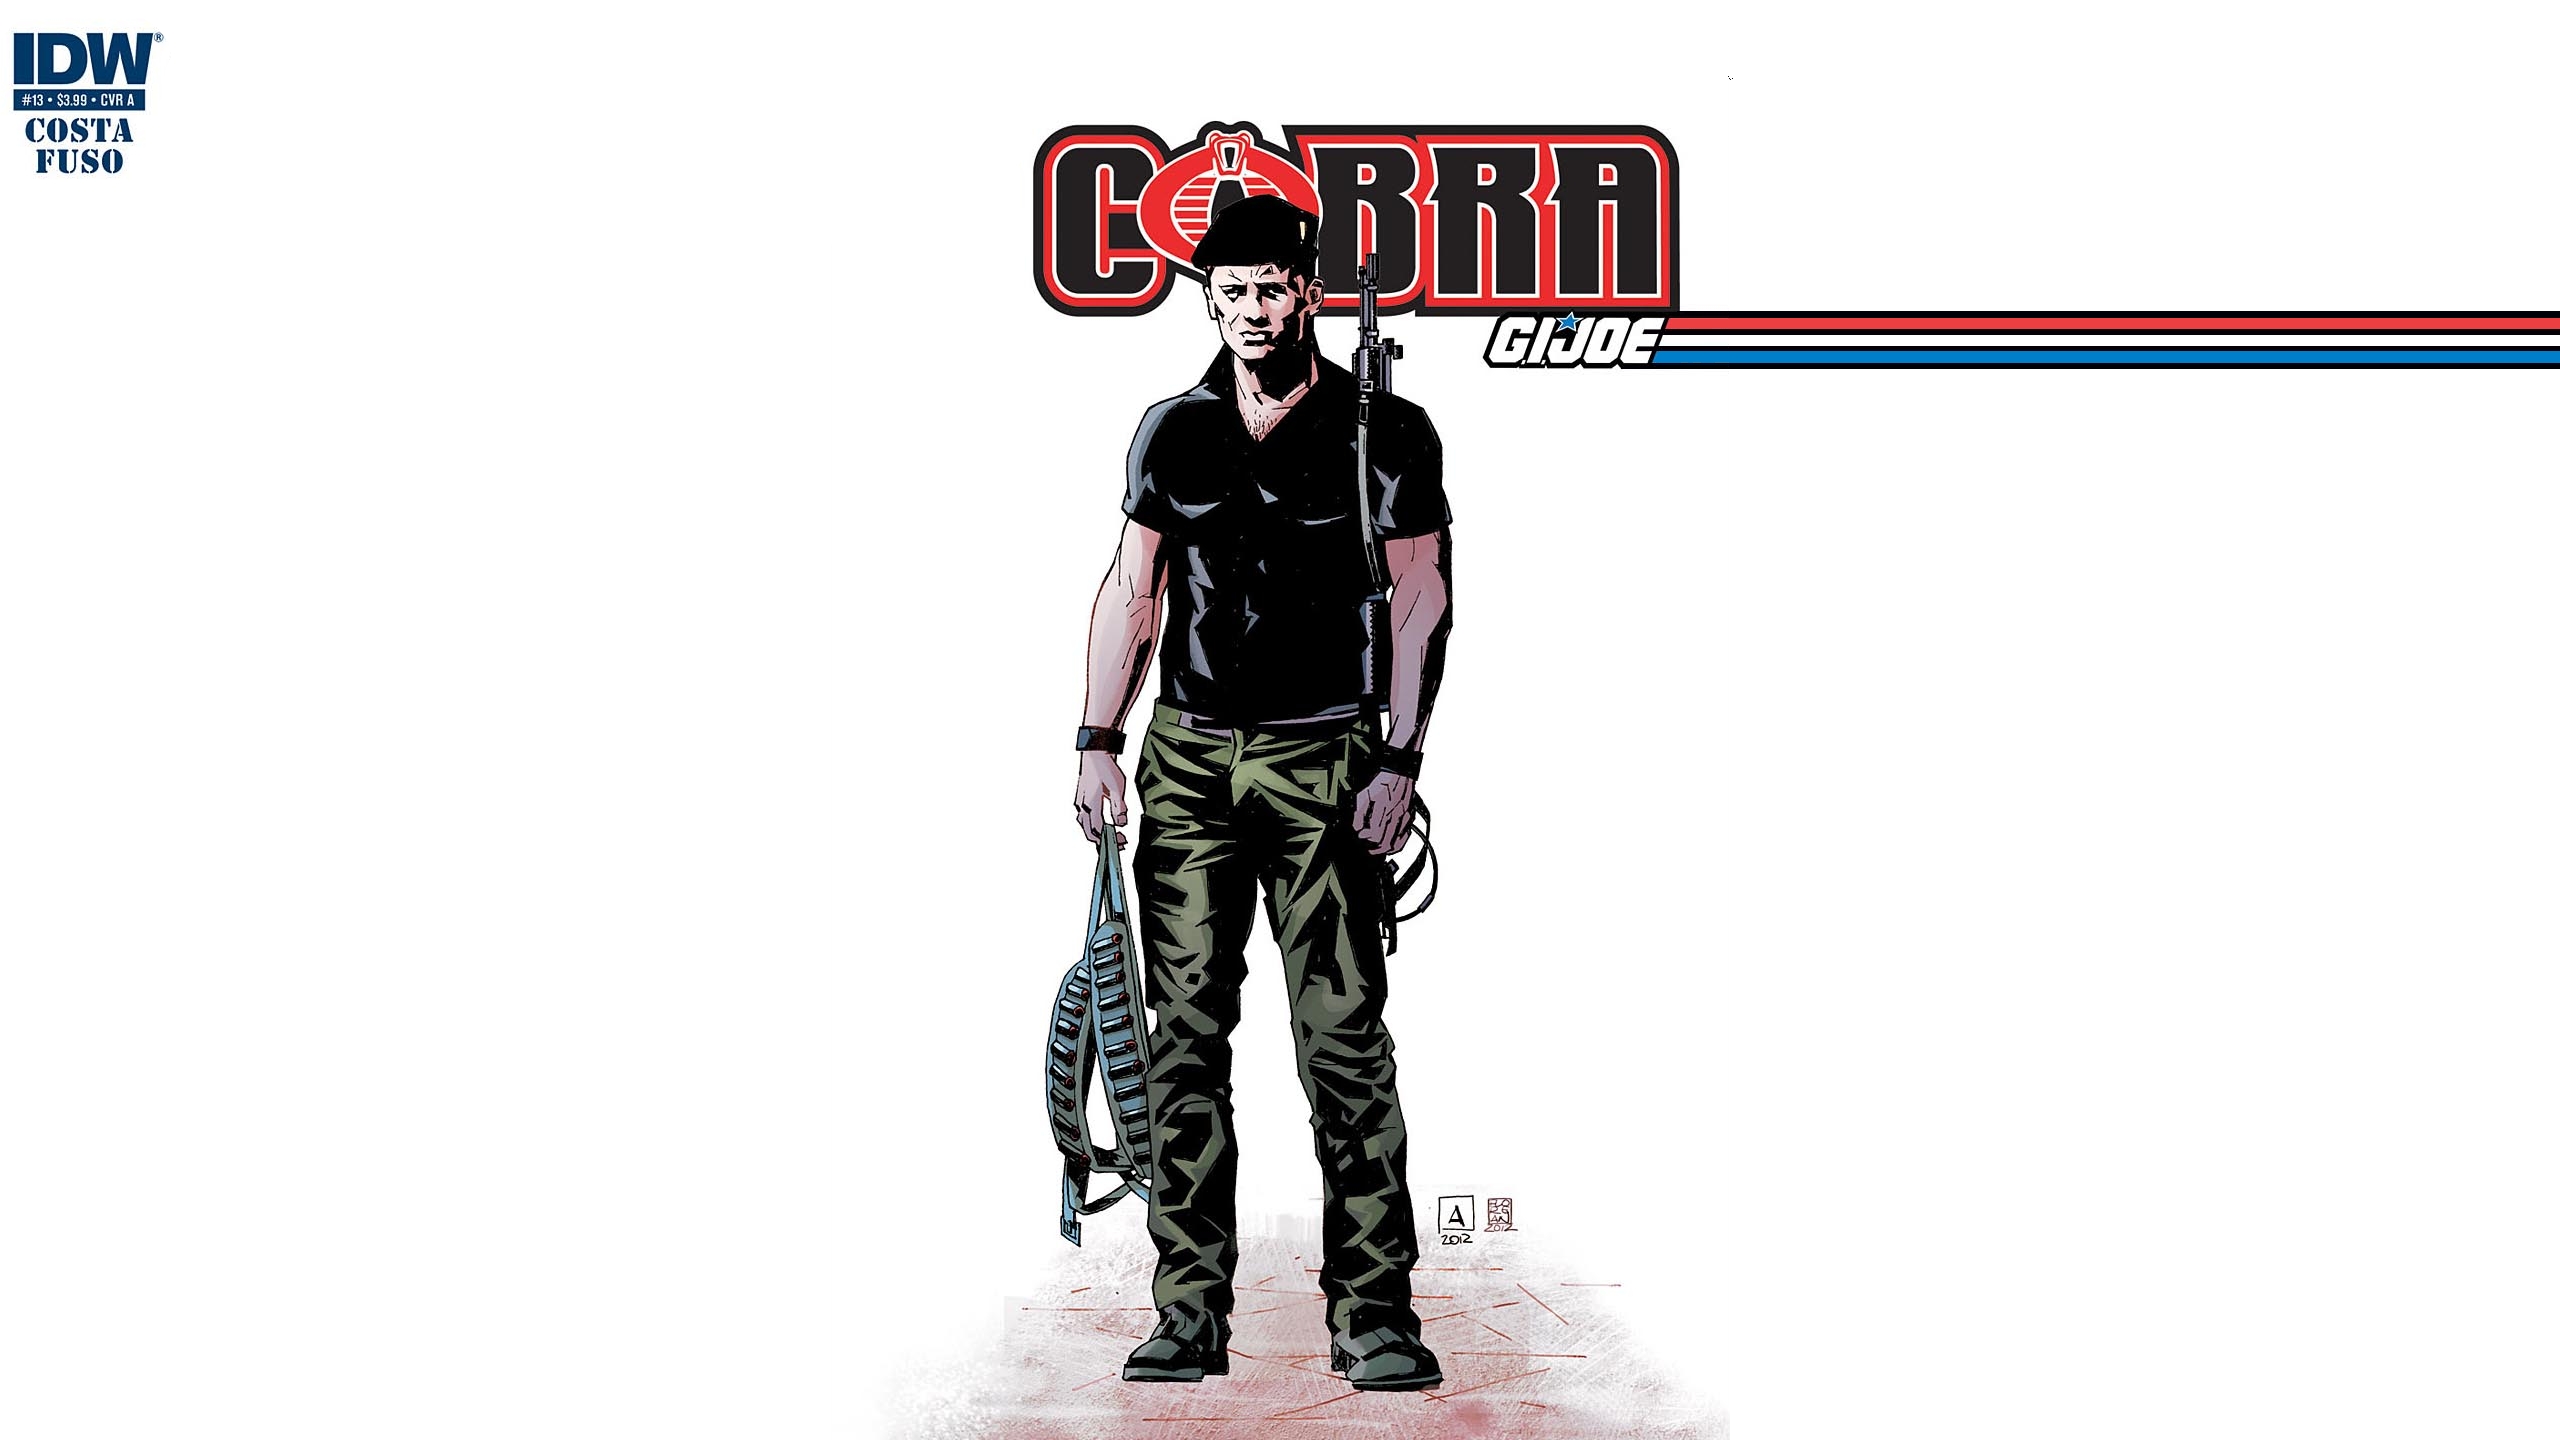 662752 Bild herunterladen comics, cobra, cobra (gi joe), gi jo - Hintergrundbilder und Bildschirmschoner kostenlos